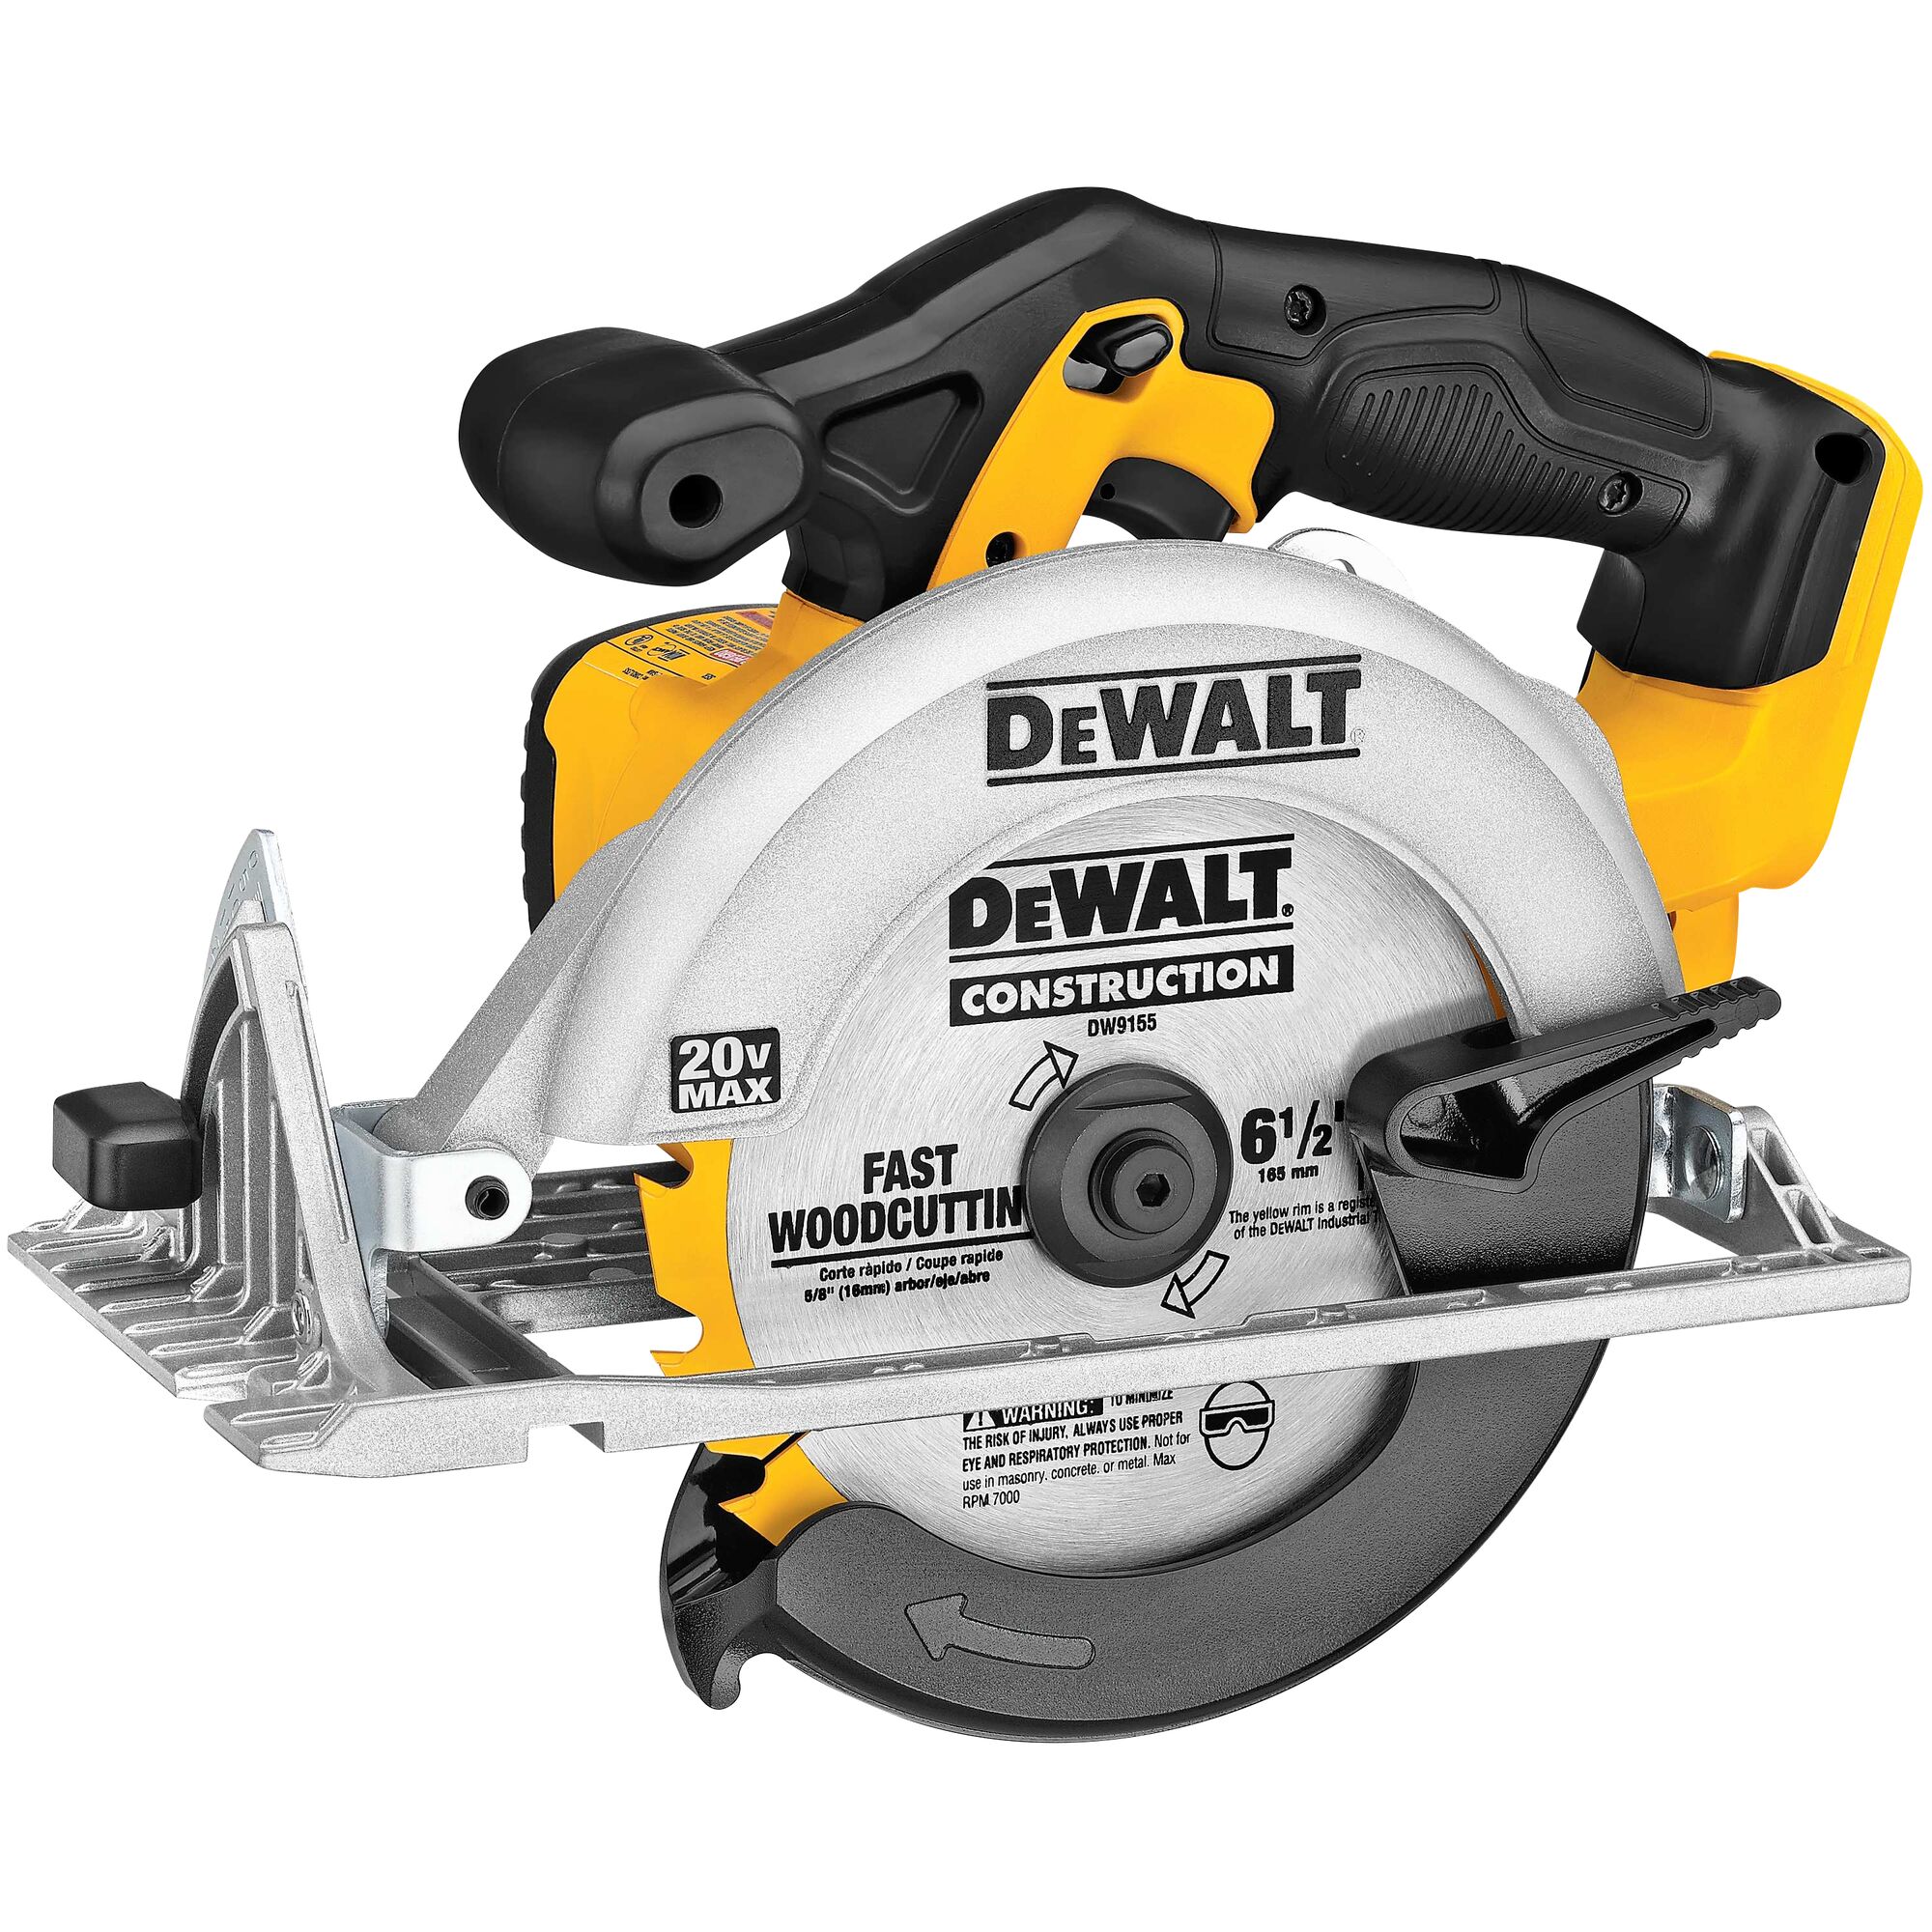 Image of DeWalt DCS391 cordless circular saw at Lowe's website